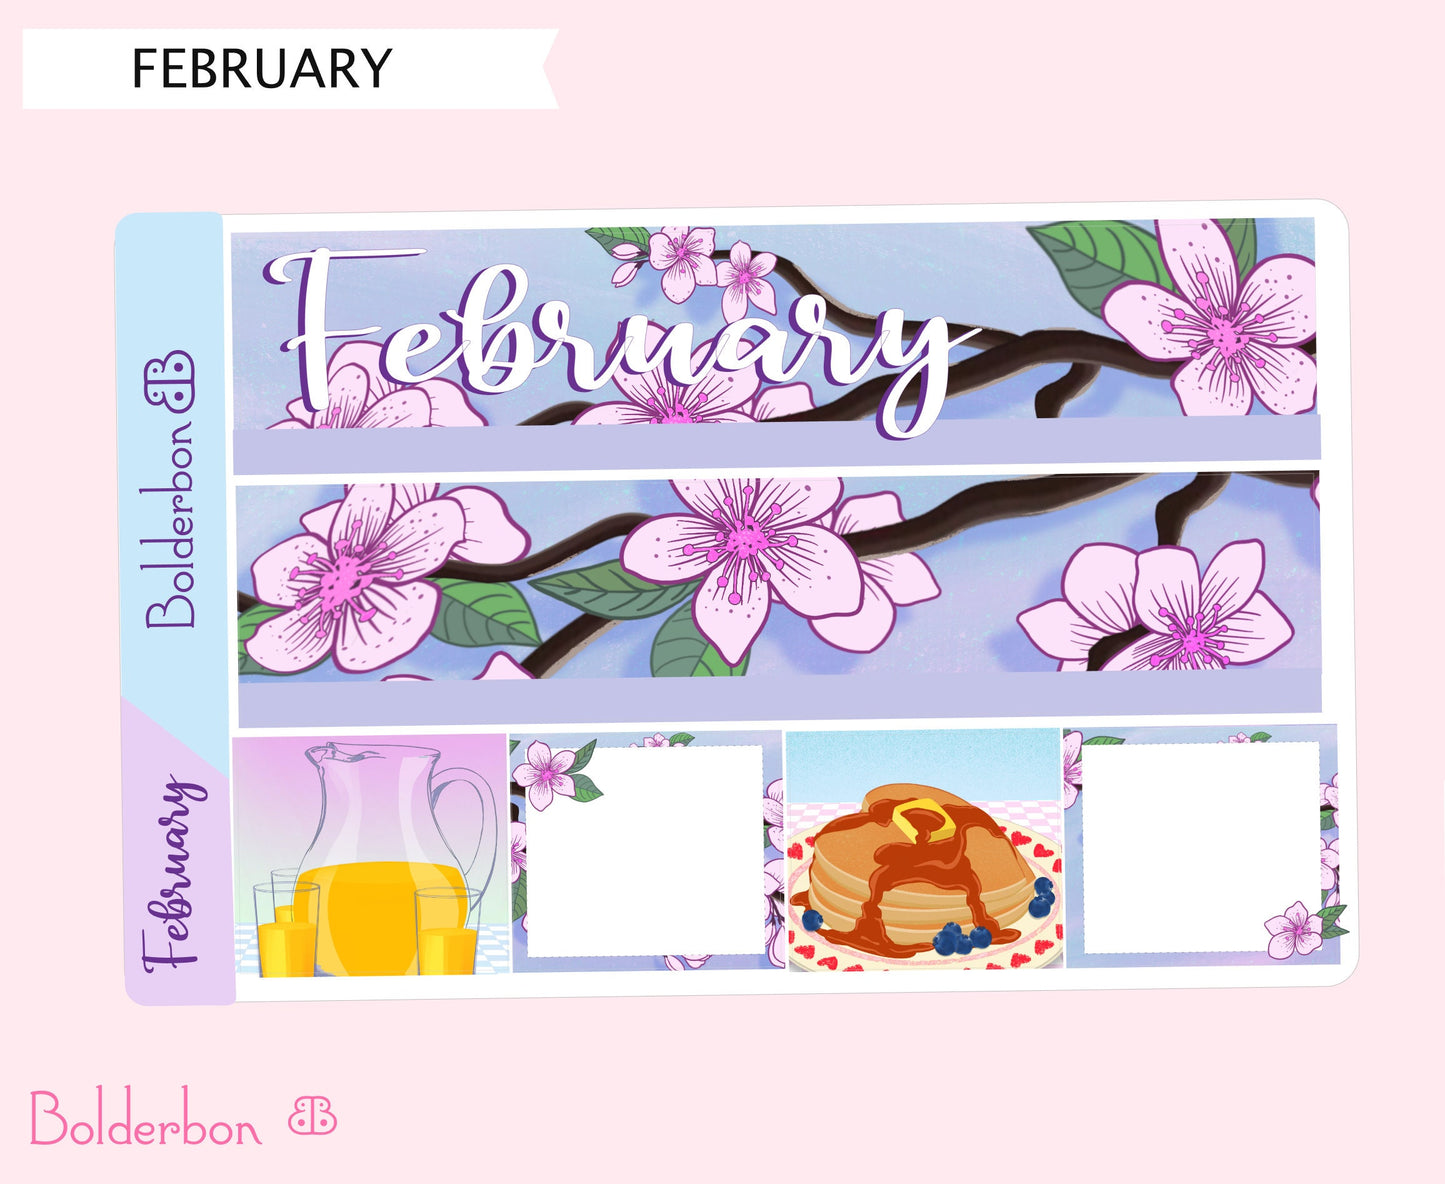 FEBRUARY  7x9 Monthly Sticker Kit